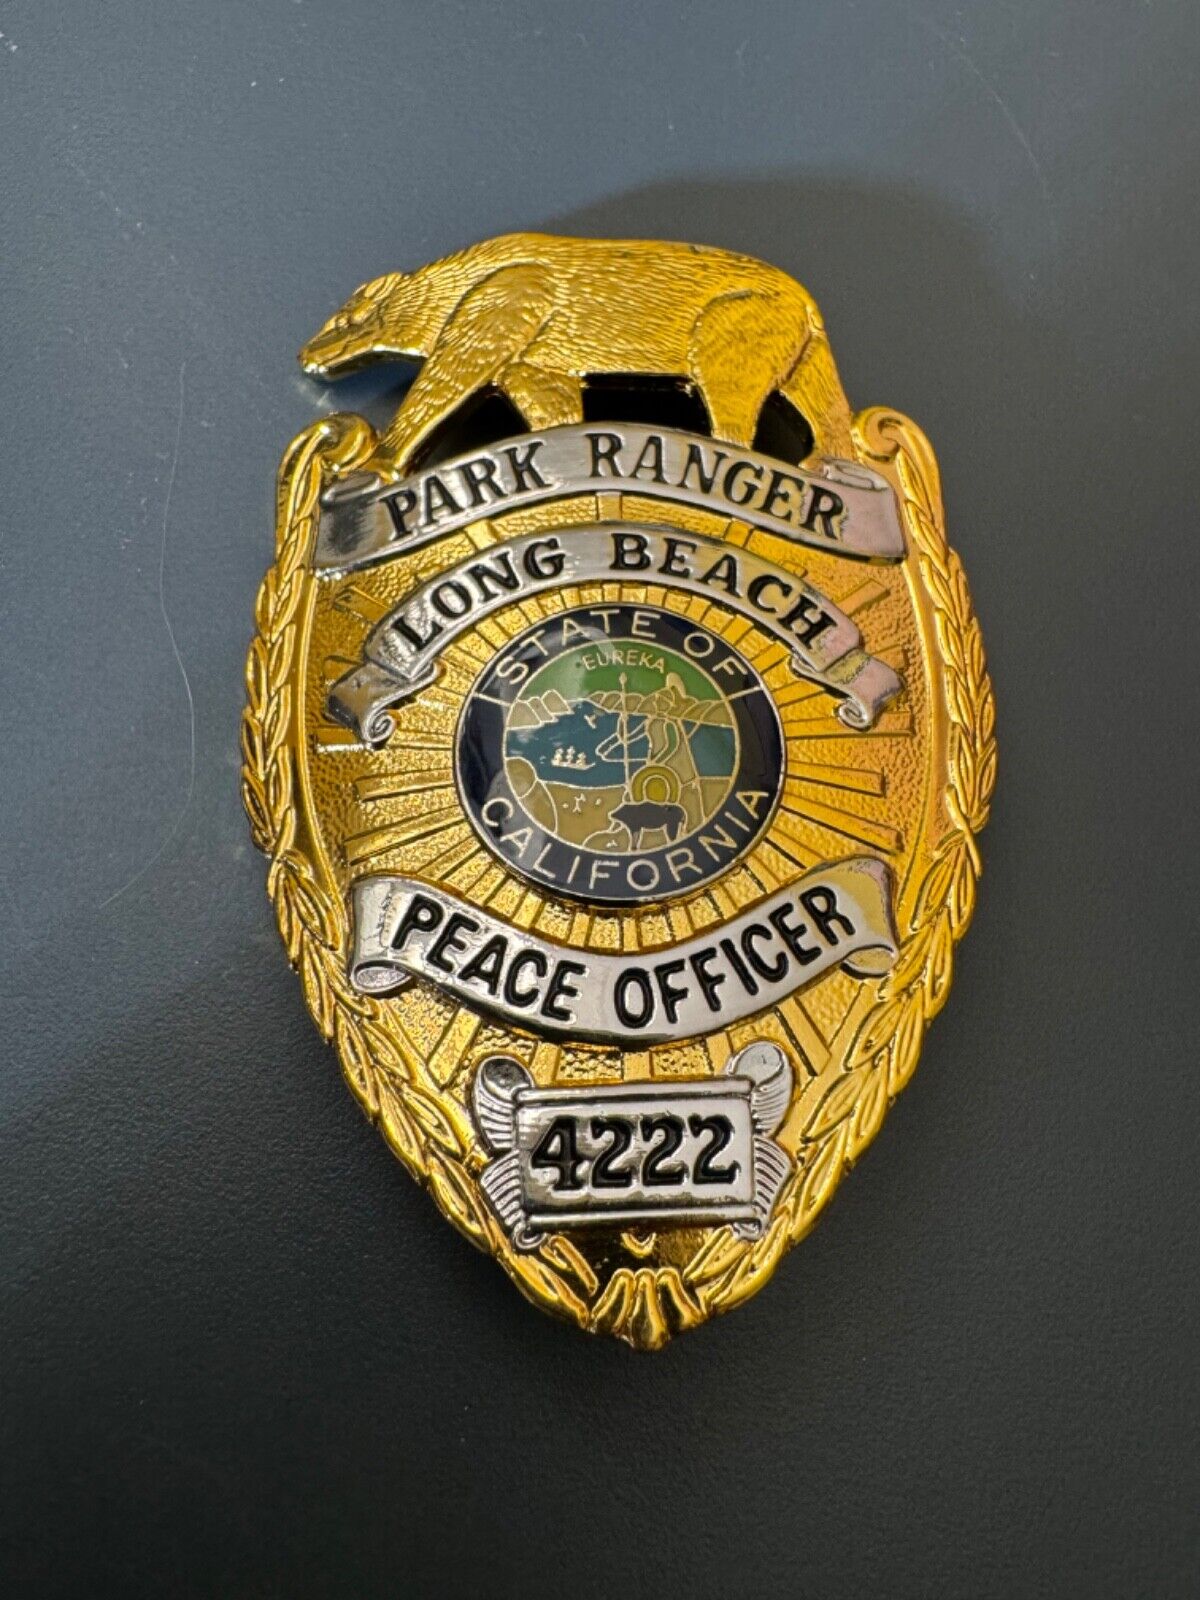 NICE REPO GODE LONG BEACH CALIFORNIA PARK RANGER PEACE OFFICER BADGE #4222 LARGE